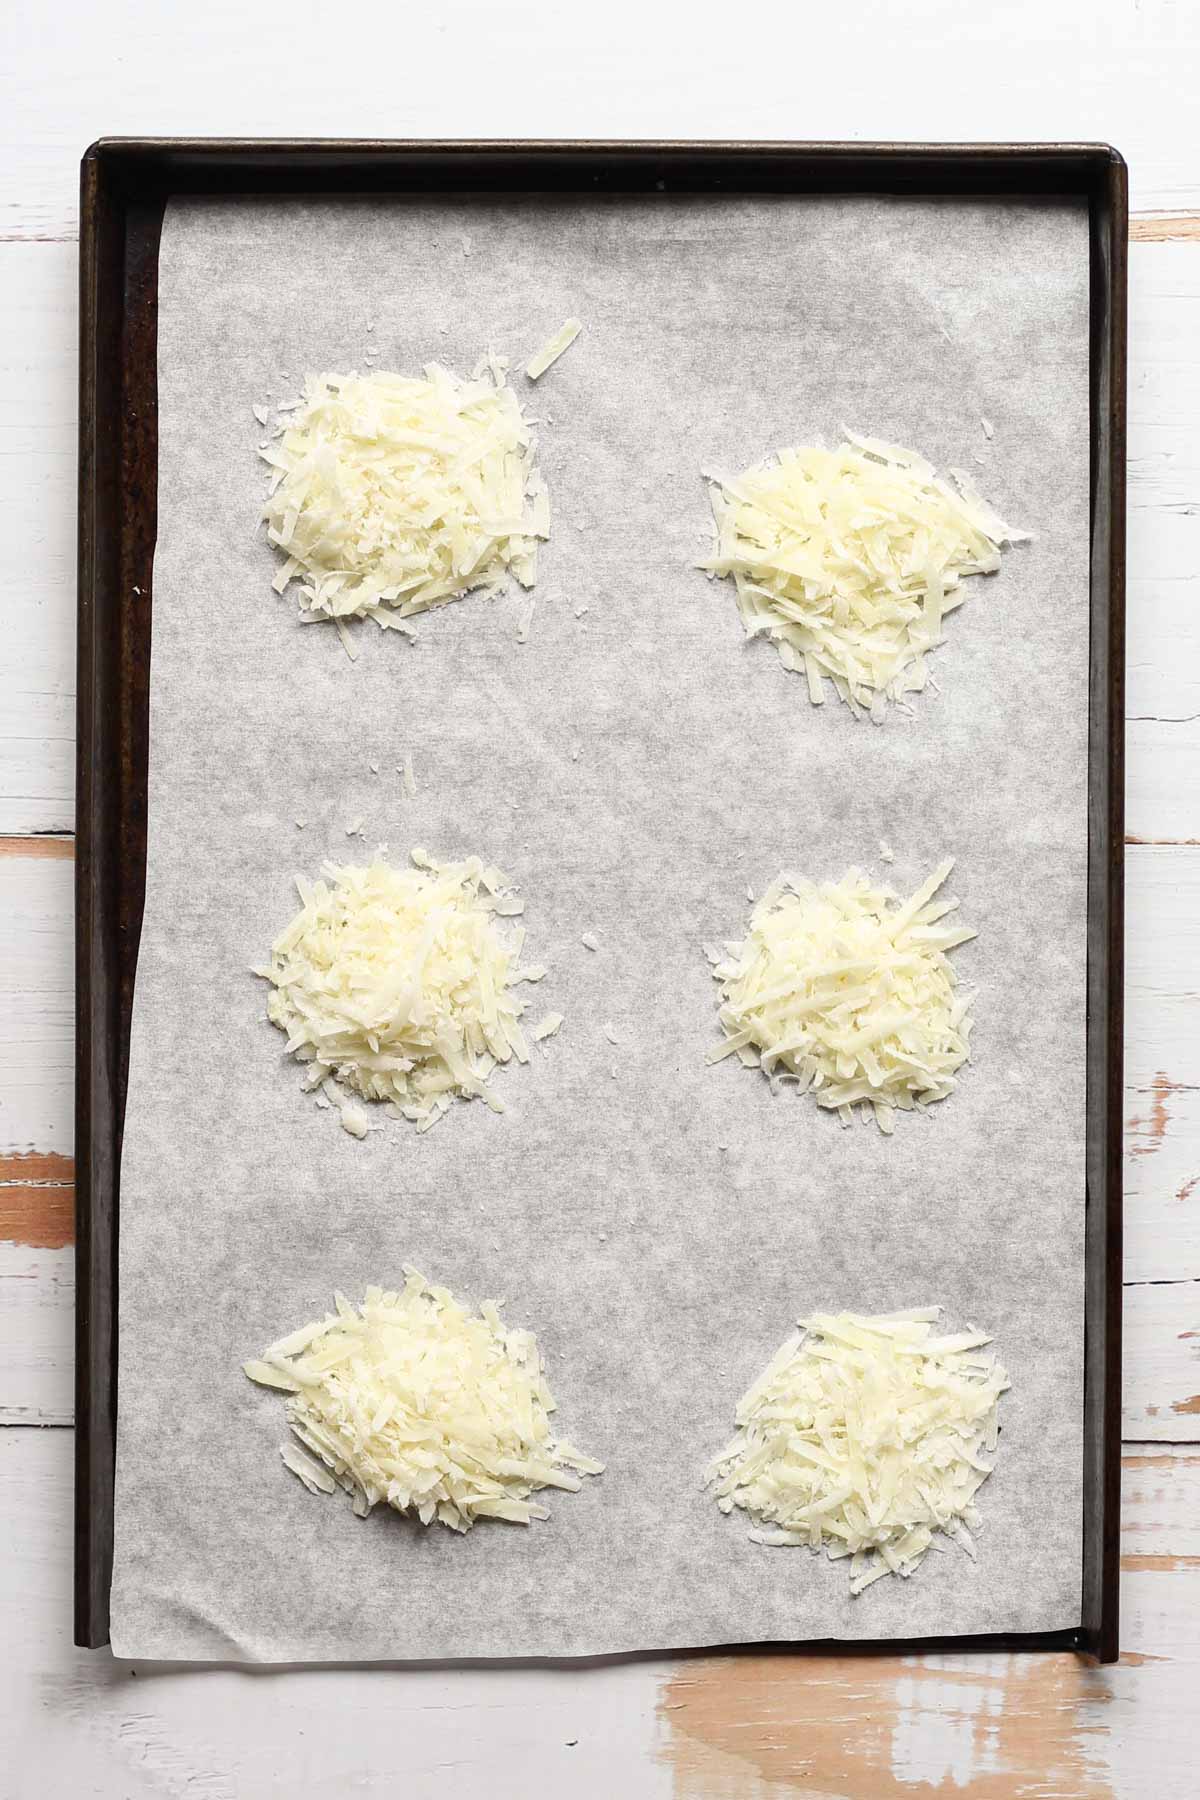 Shredded pecorino Romano cheese crisps on a sheet pan